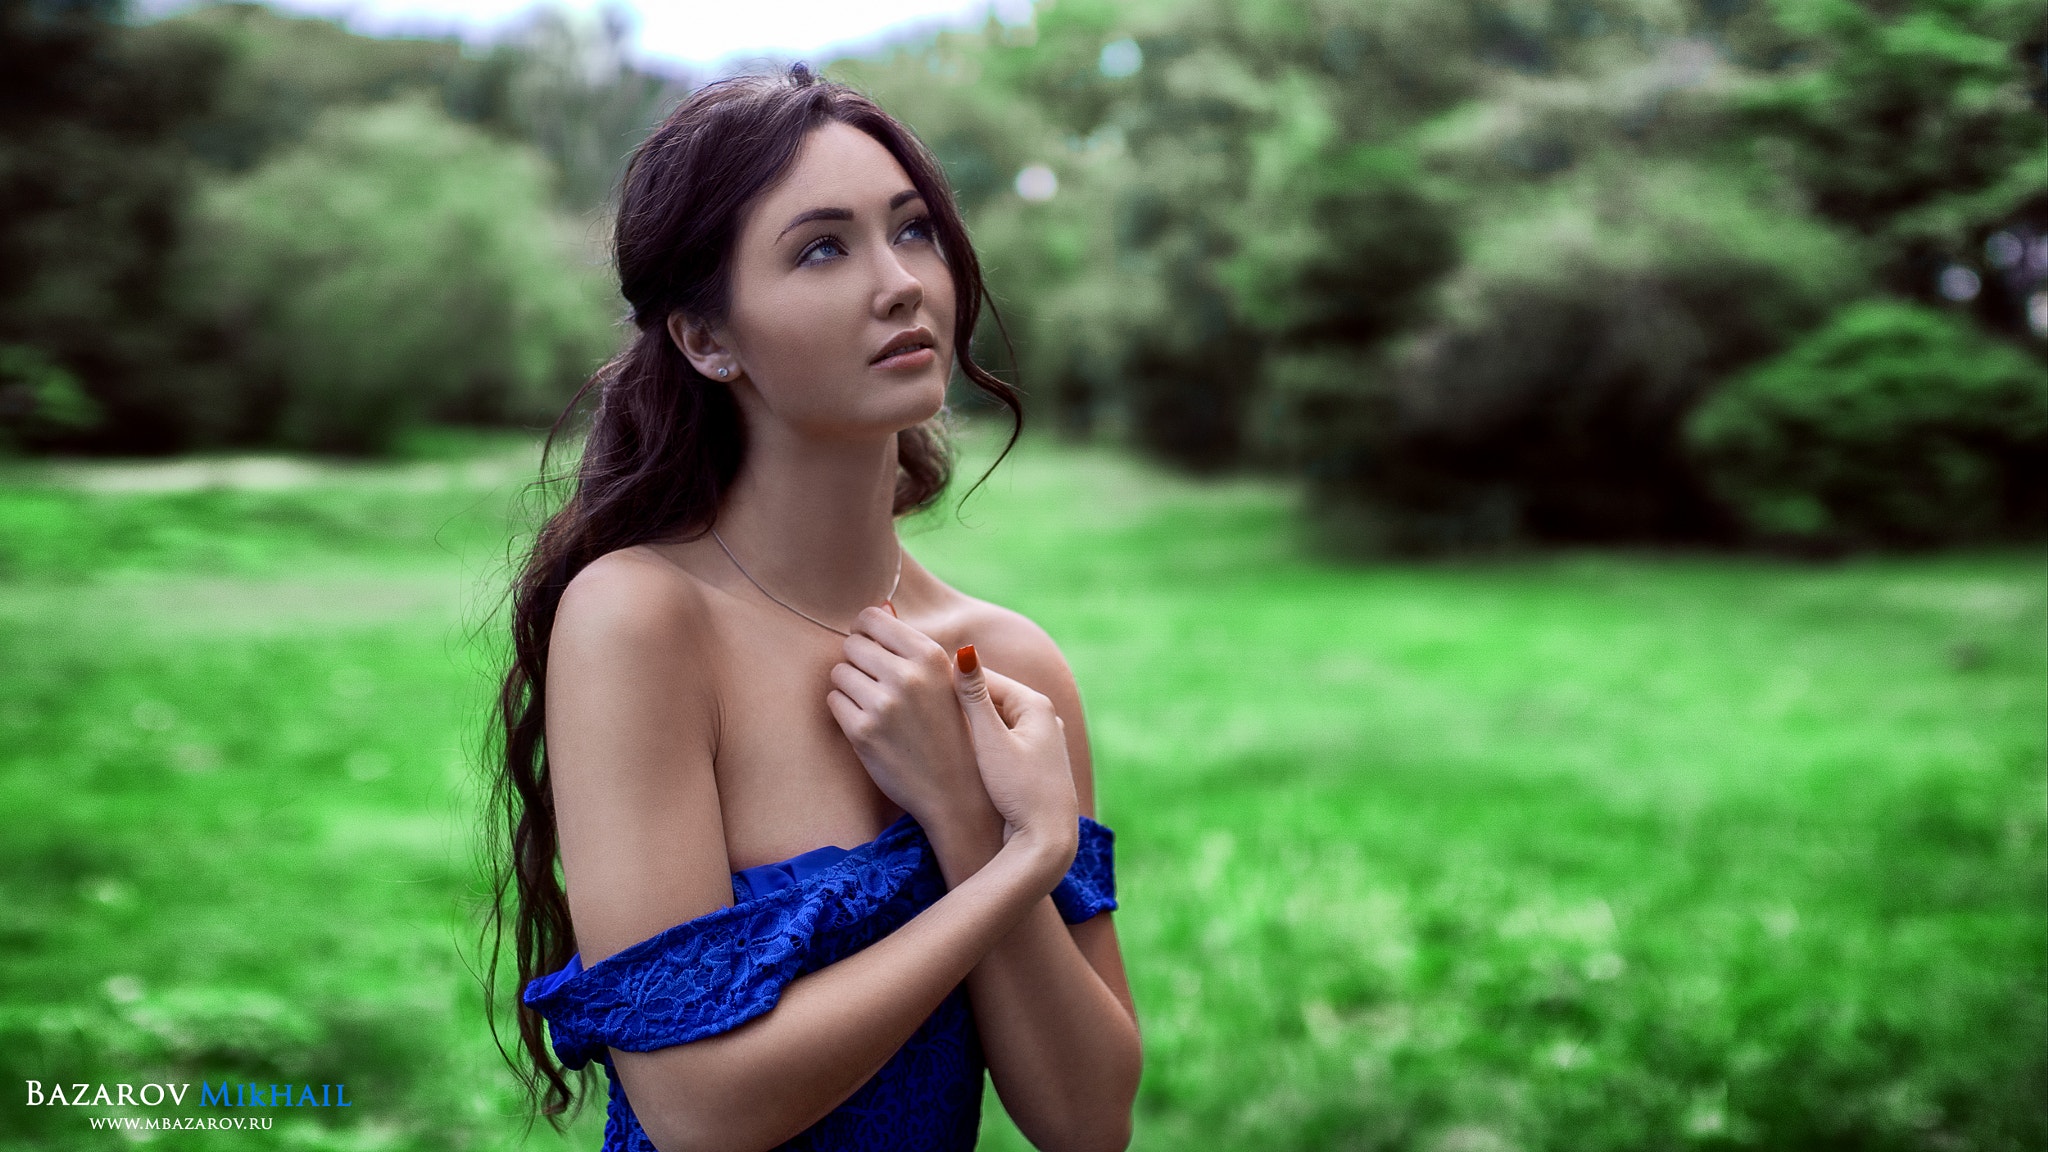 Women Outdoors Bare Shoulders Green Long Hair Blue Dress Mikhail Bazarov Watermarked 2048x1152